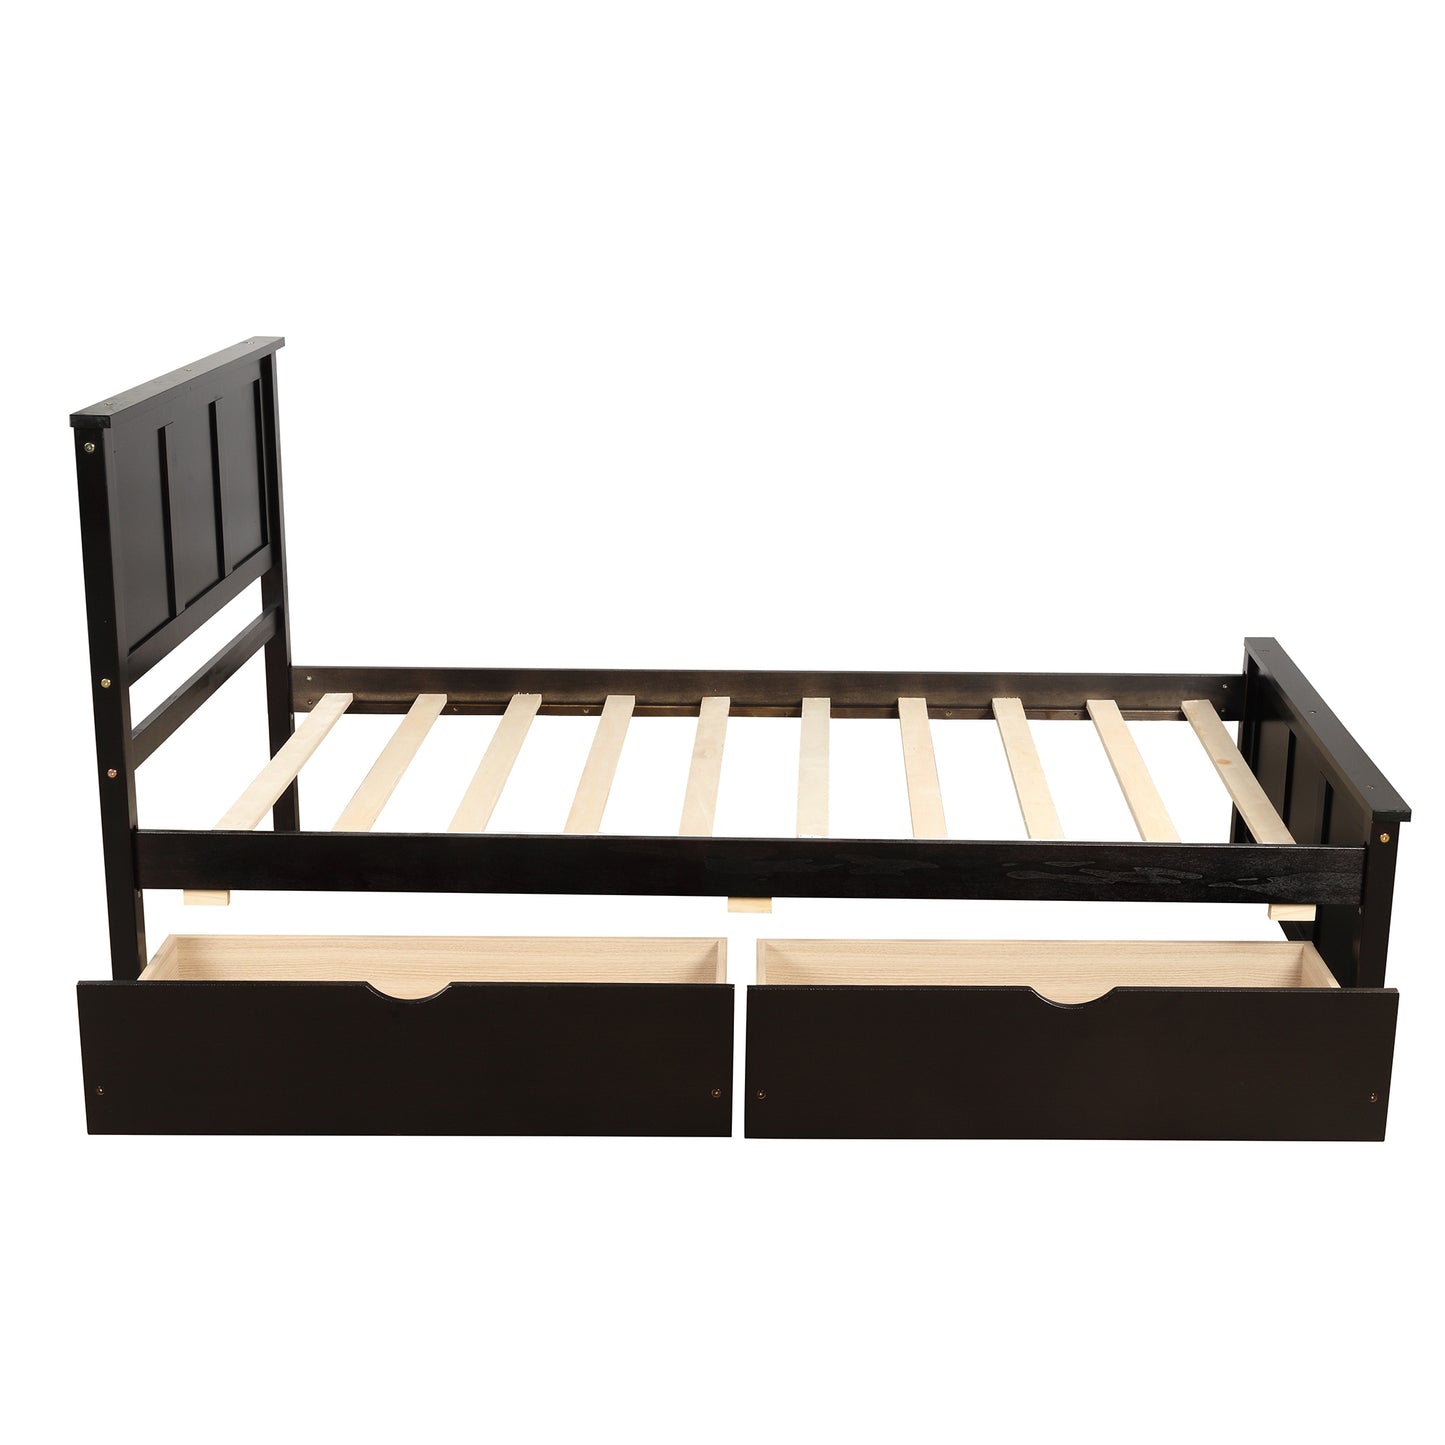 Platform Storage Bed, 2 drawers with wheels, Twin Size Frame, Espresso